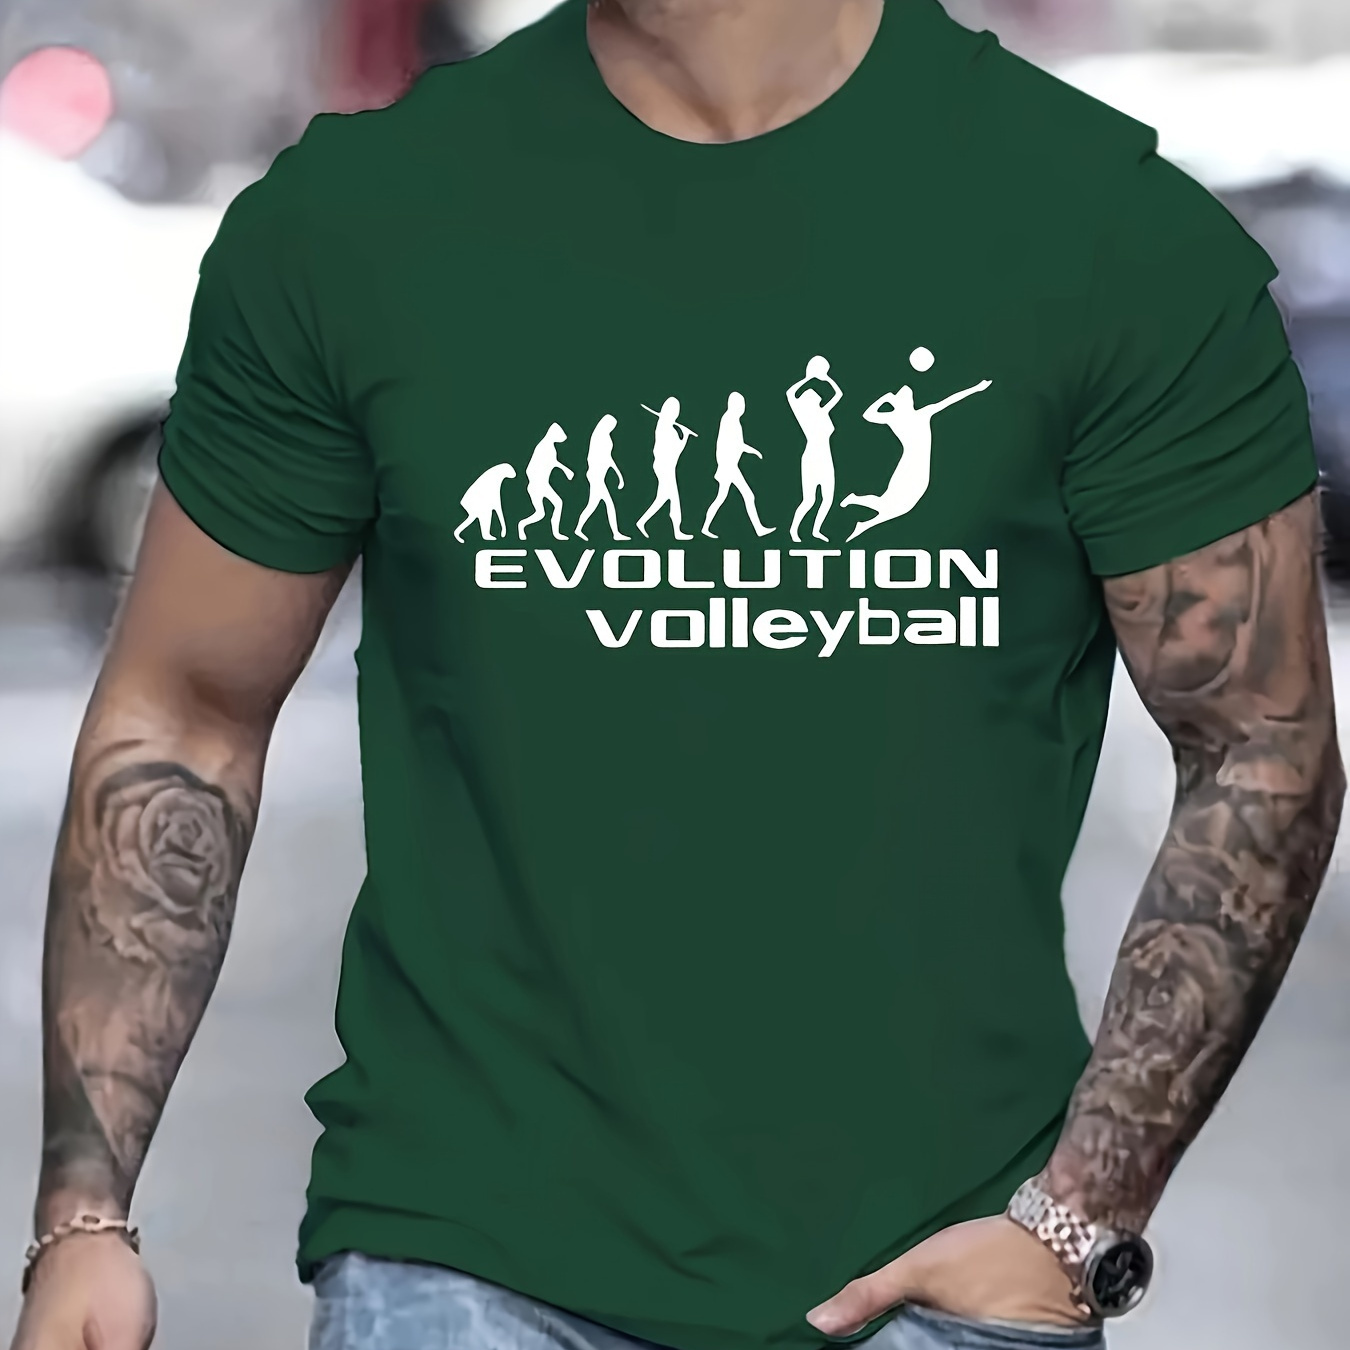 

Evolution Volleyball Print Men's T-shirt, Casual Versatile Short Sleeve Crew Neck Tee Top, Men's Summer Clothing